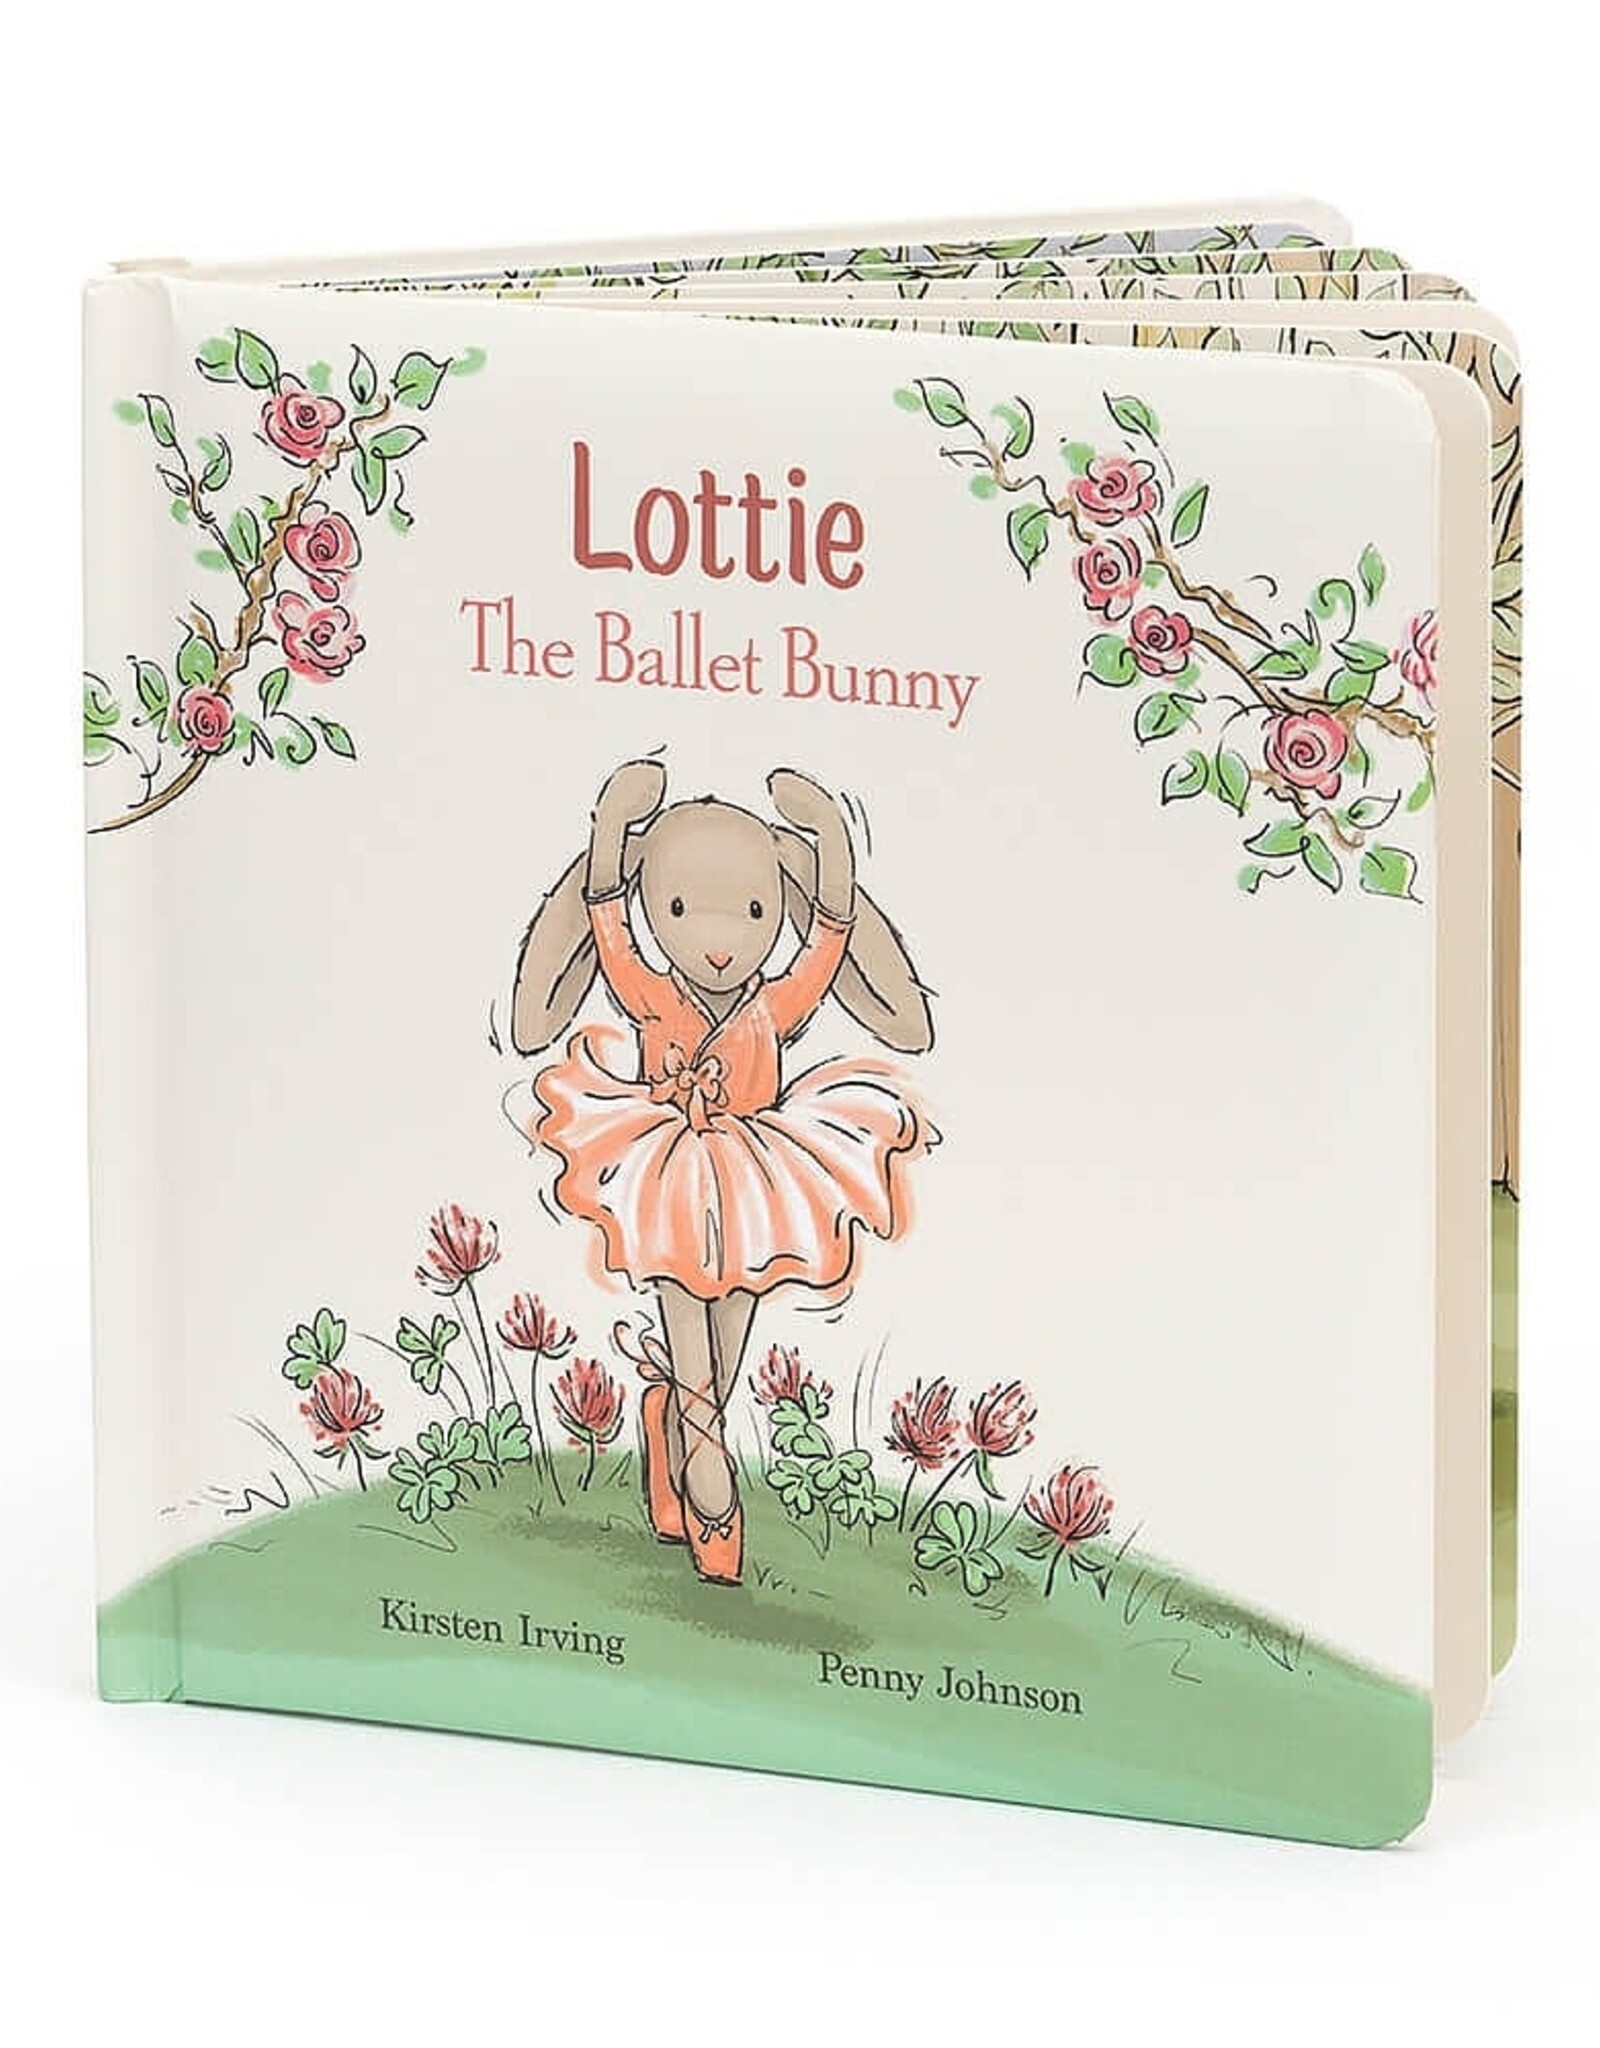 Jellycat Lottie the Ballet Bunny book